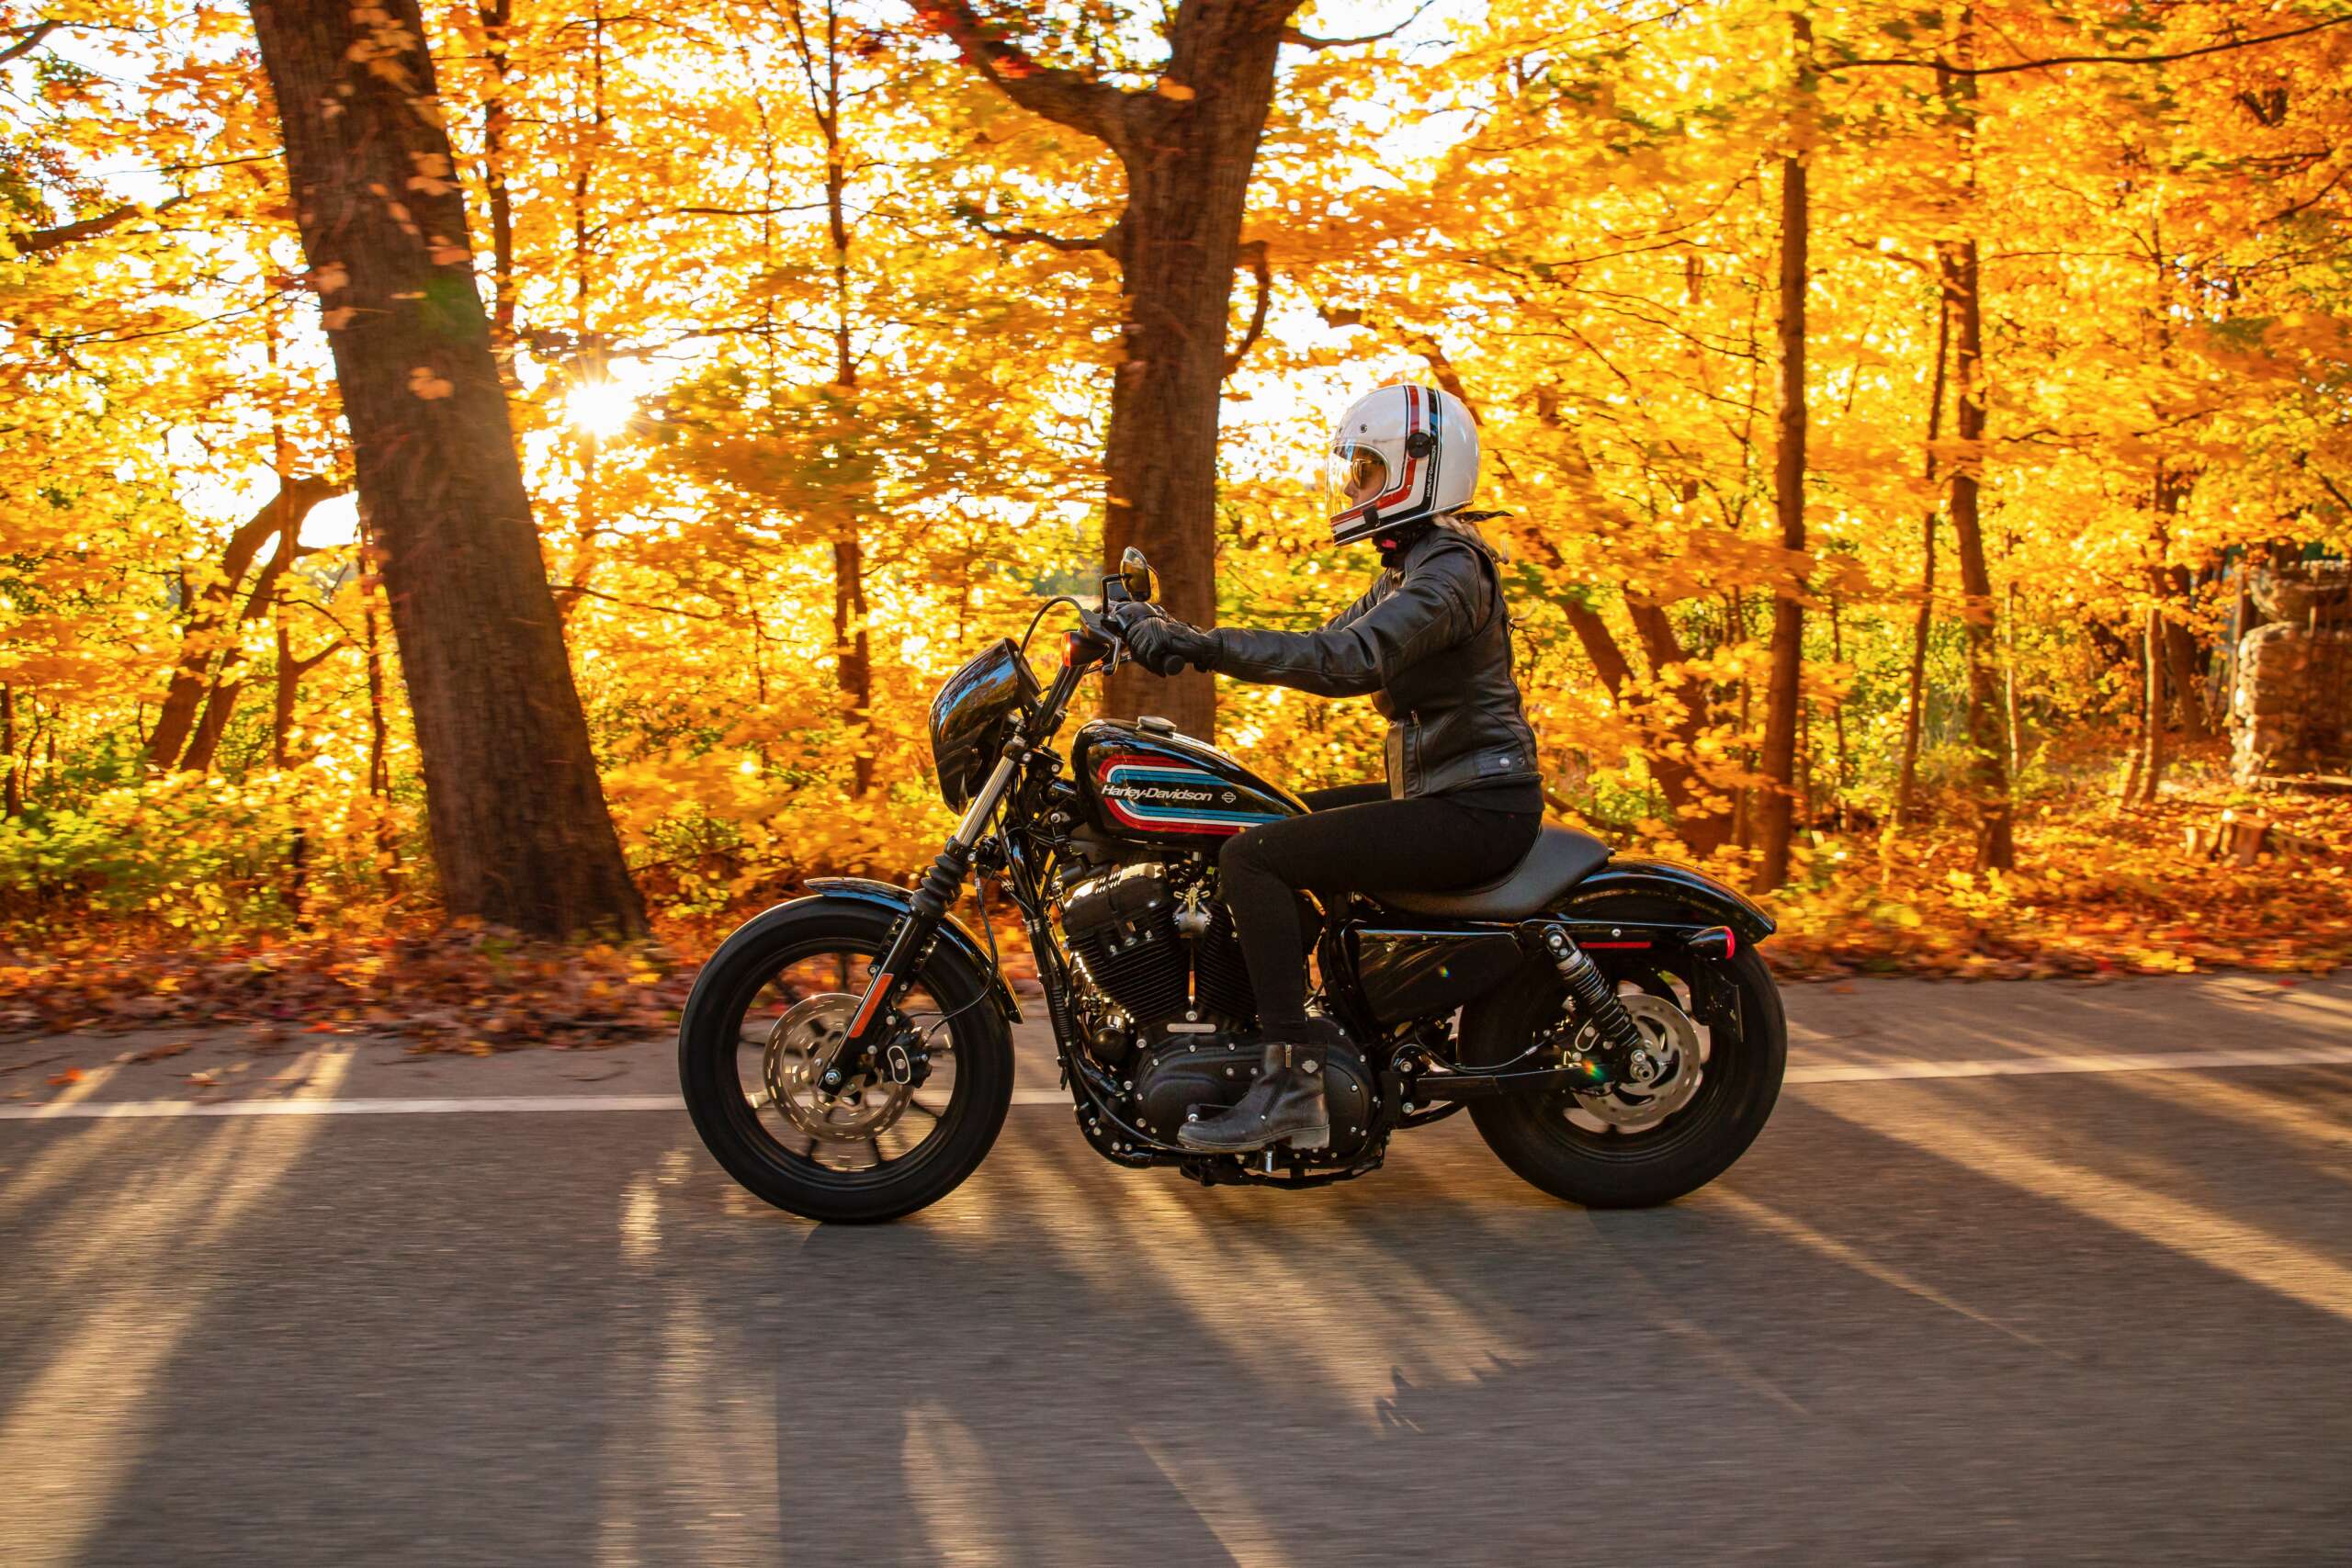 2021 Harley Davidson Iron 1200 Guide Total Motorcycle